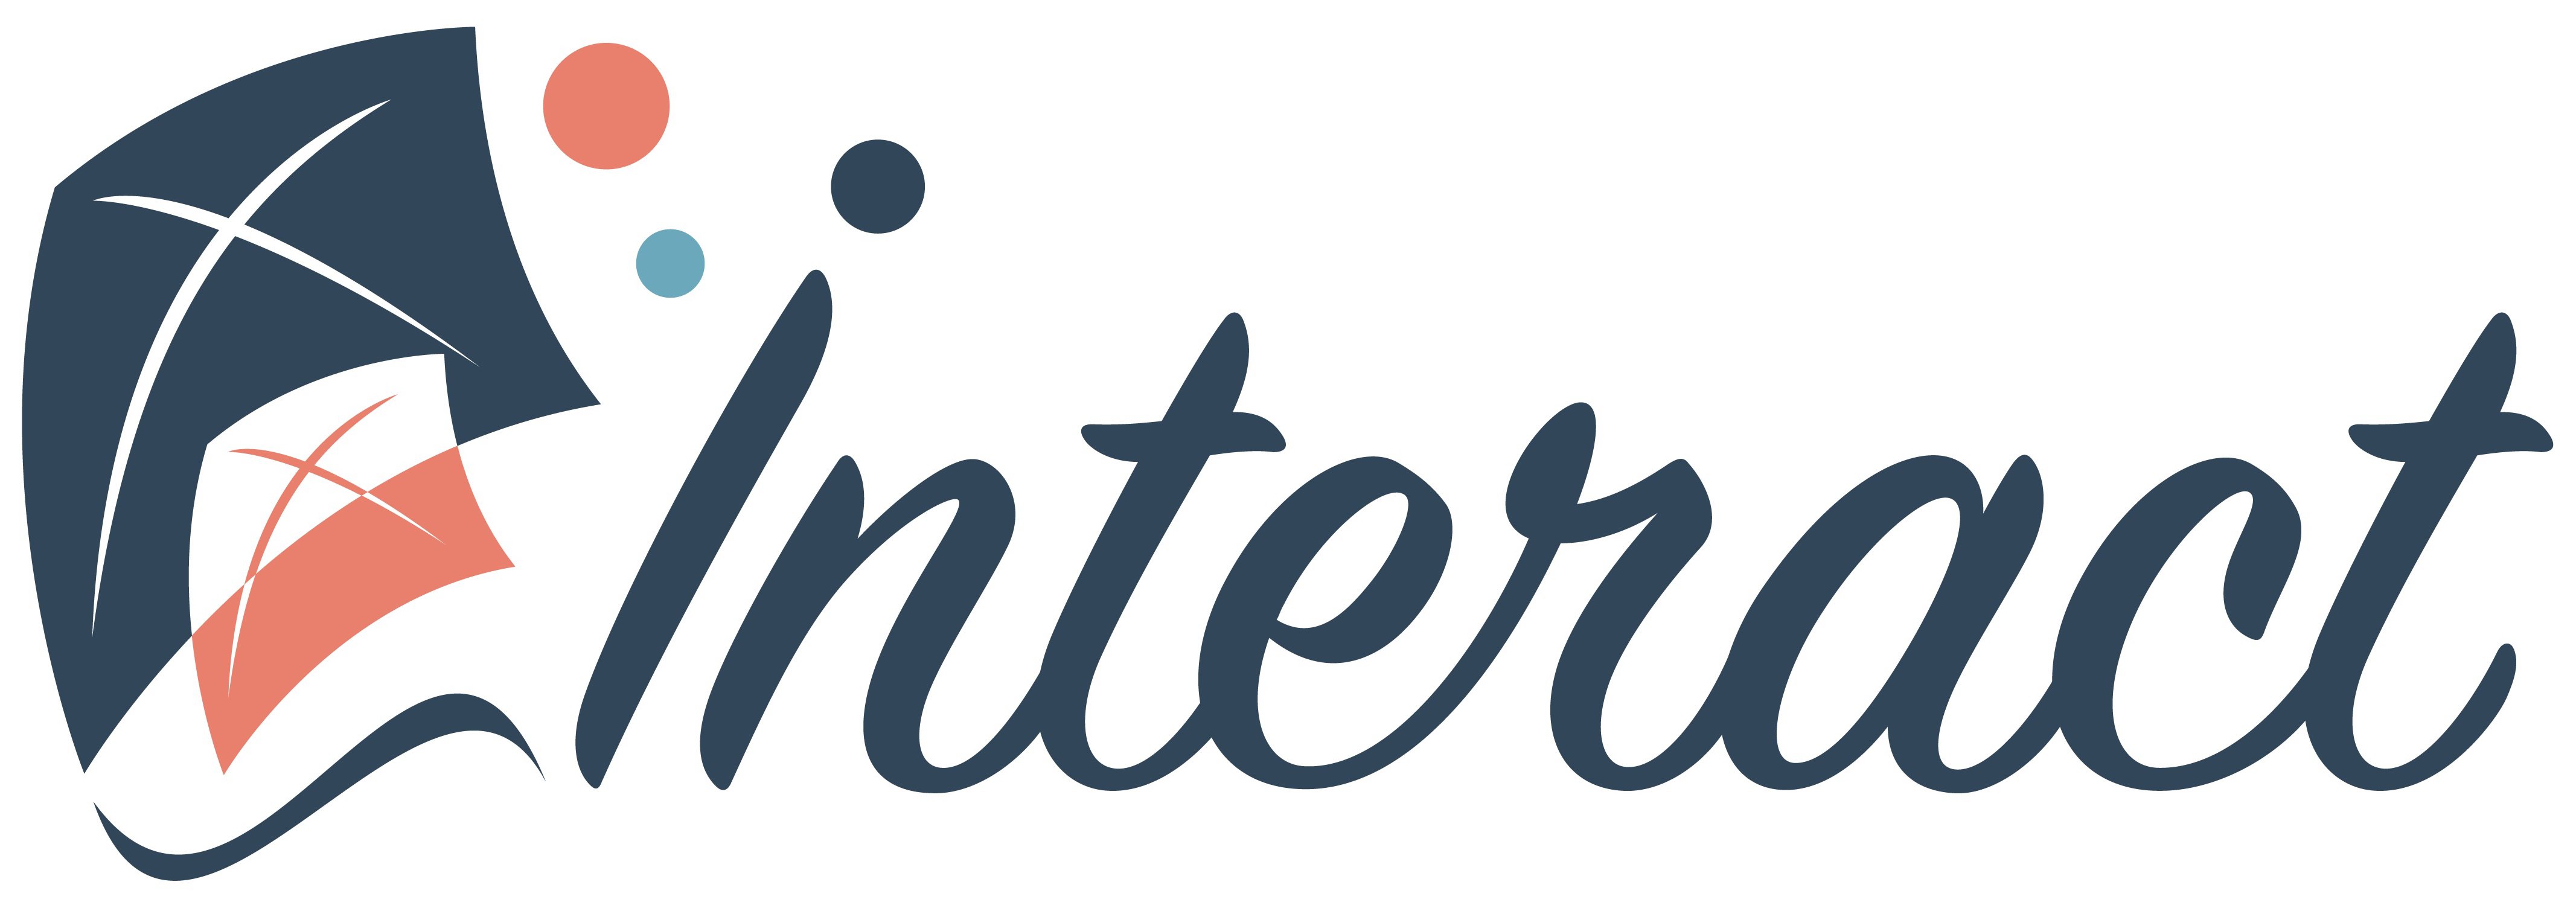 Trademark Logo INTERACT